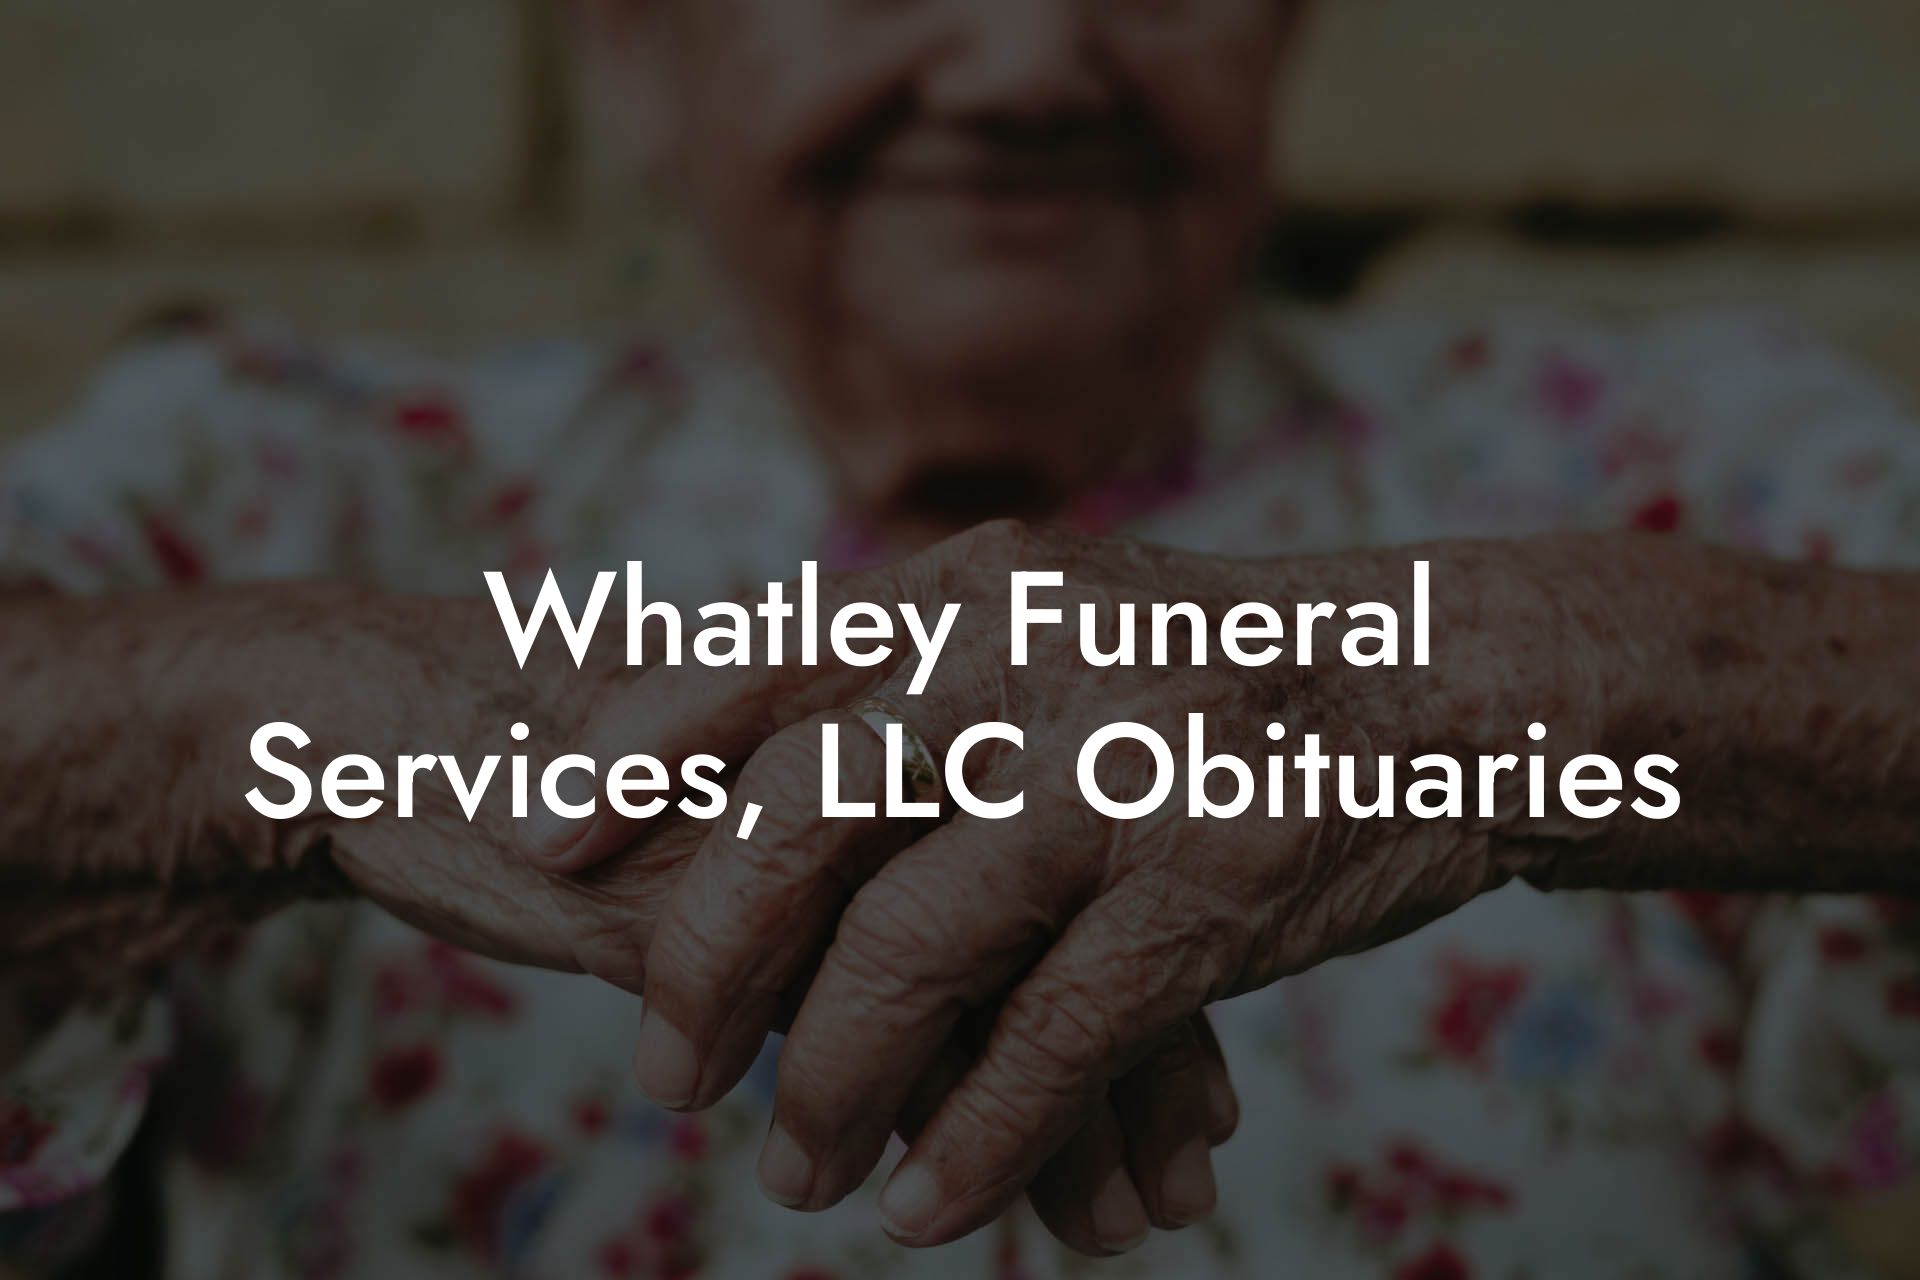 Whatley Funeral Services, LLC Obituaries